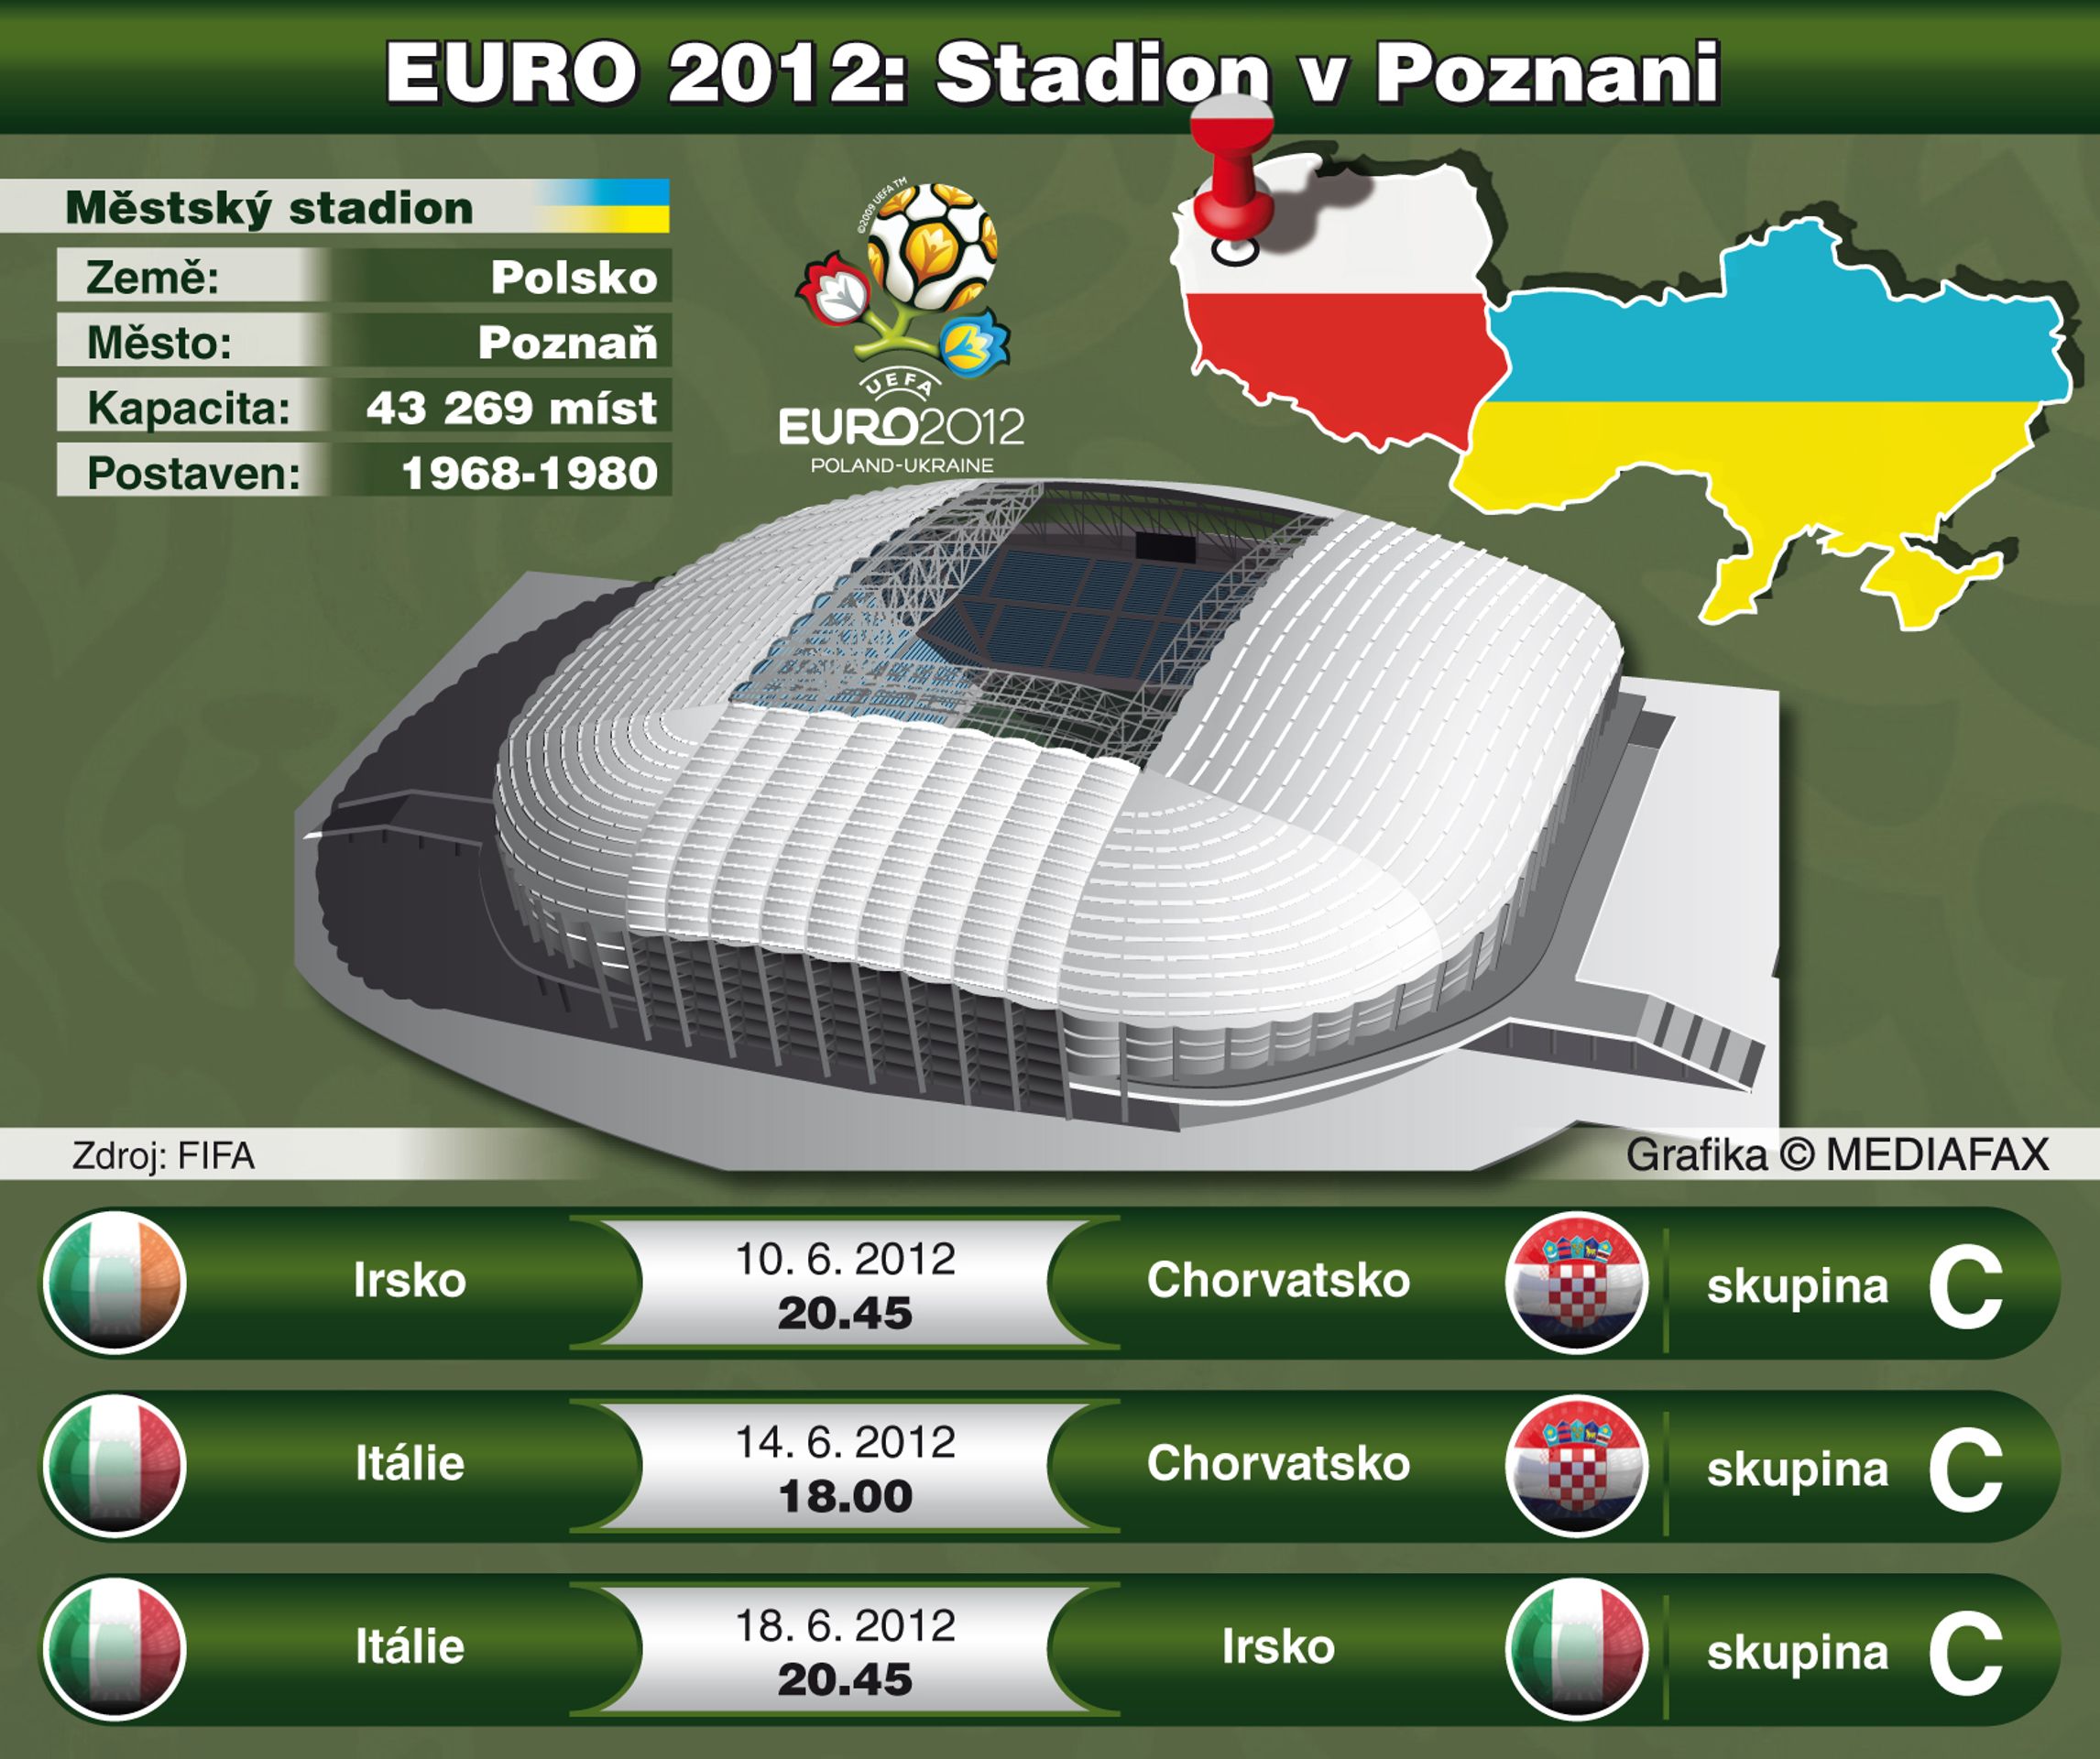 Stadiony pro EURO 2012 - 6 - GALERIE: Stadiony pro fotbalové EURO 2012 (3/8)